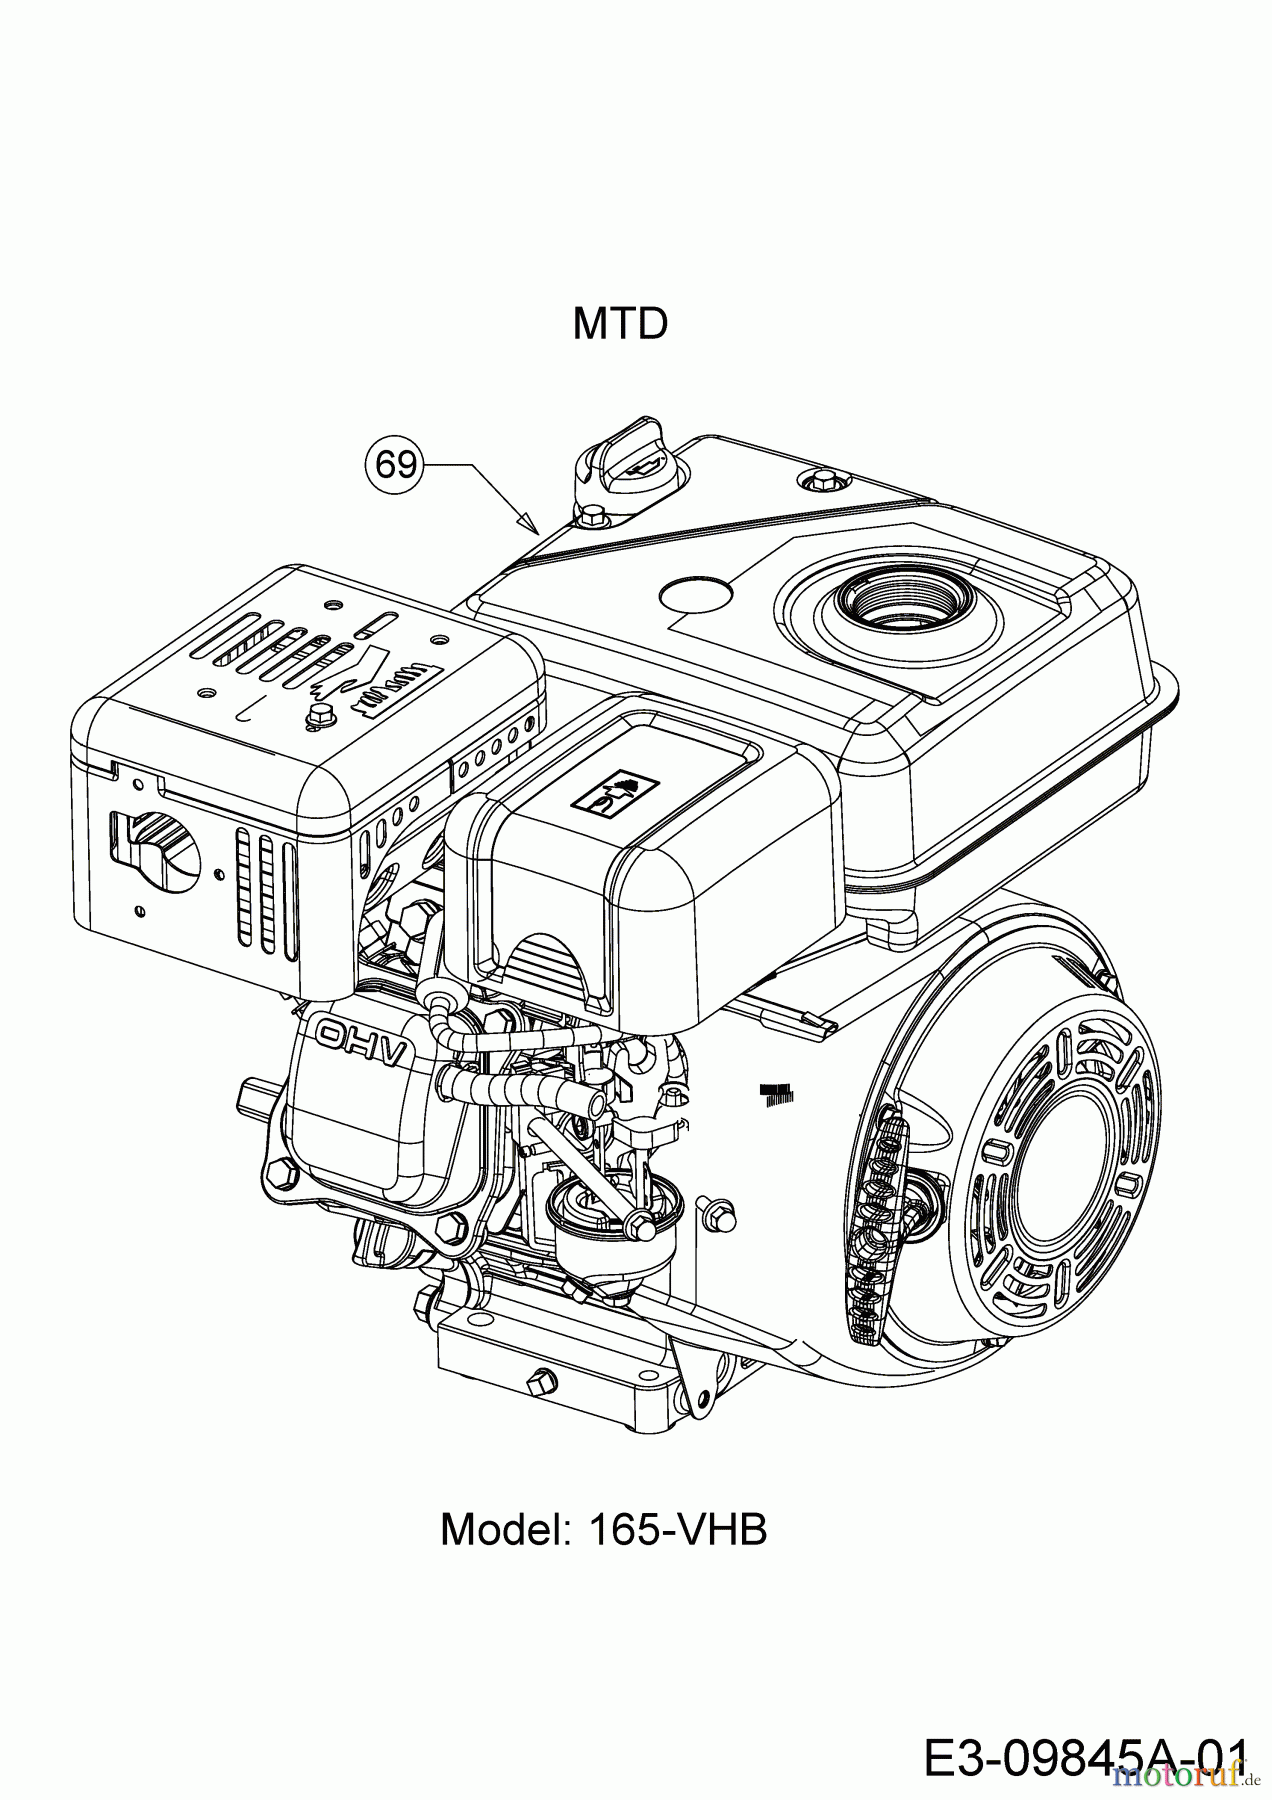  MTD Tillers T/330 M 21D-33MV678  (2019) Engine MTD